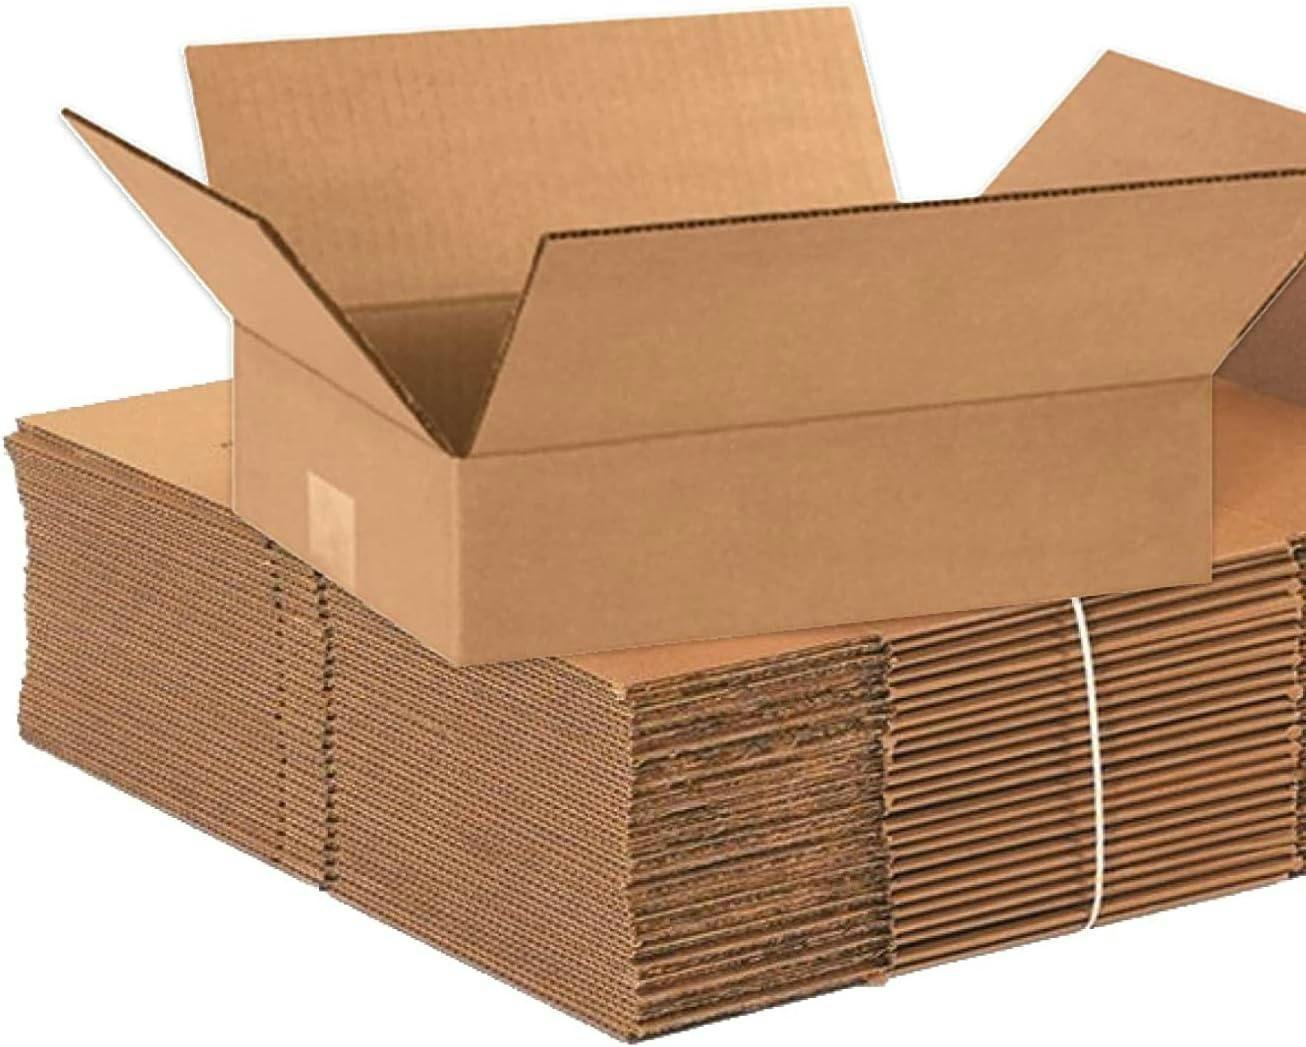 Eco-Friendly Kraft Corrugated Shipping Box 12"x8"x3" - Pack of 25